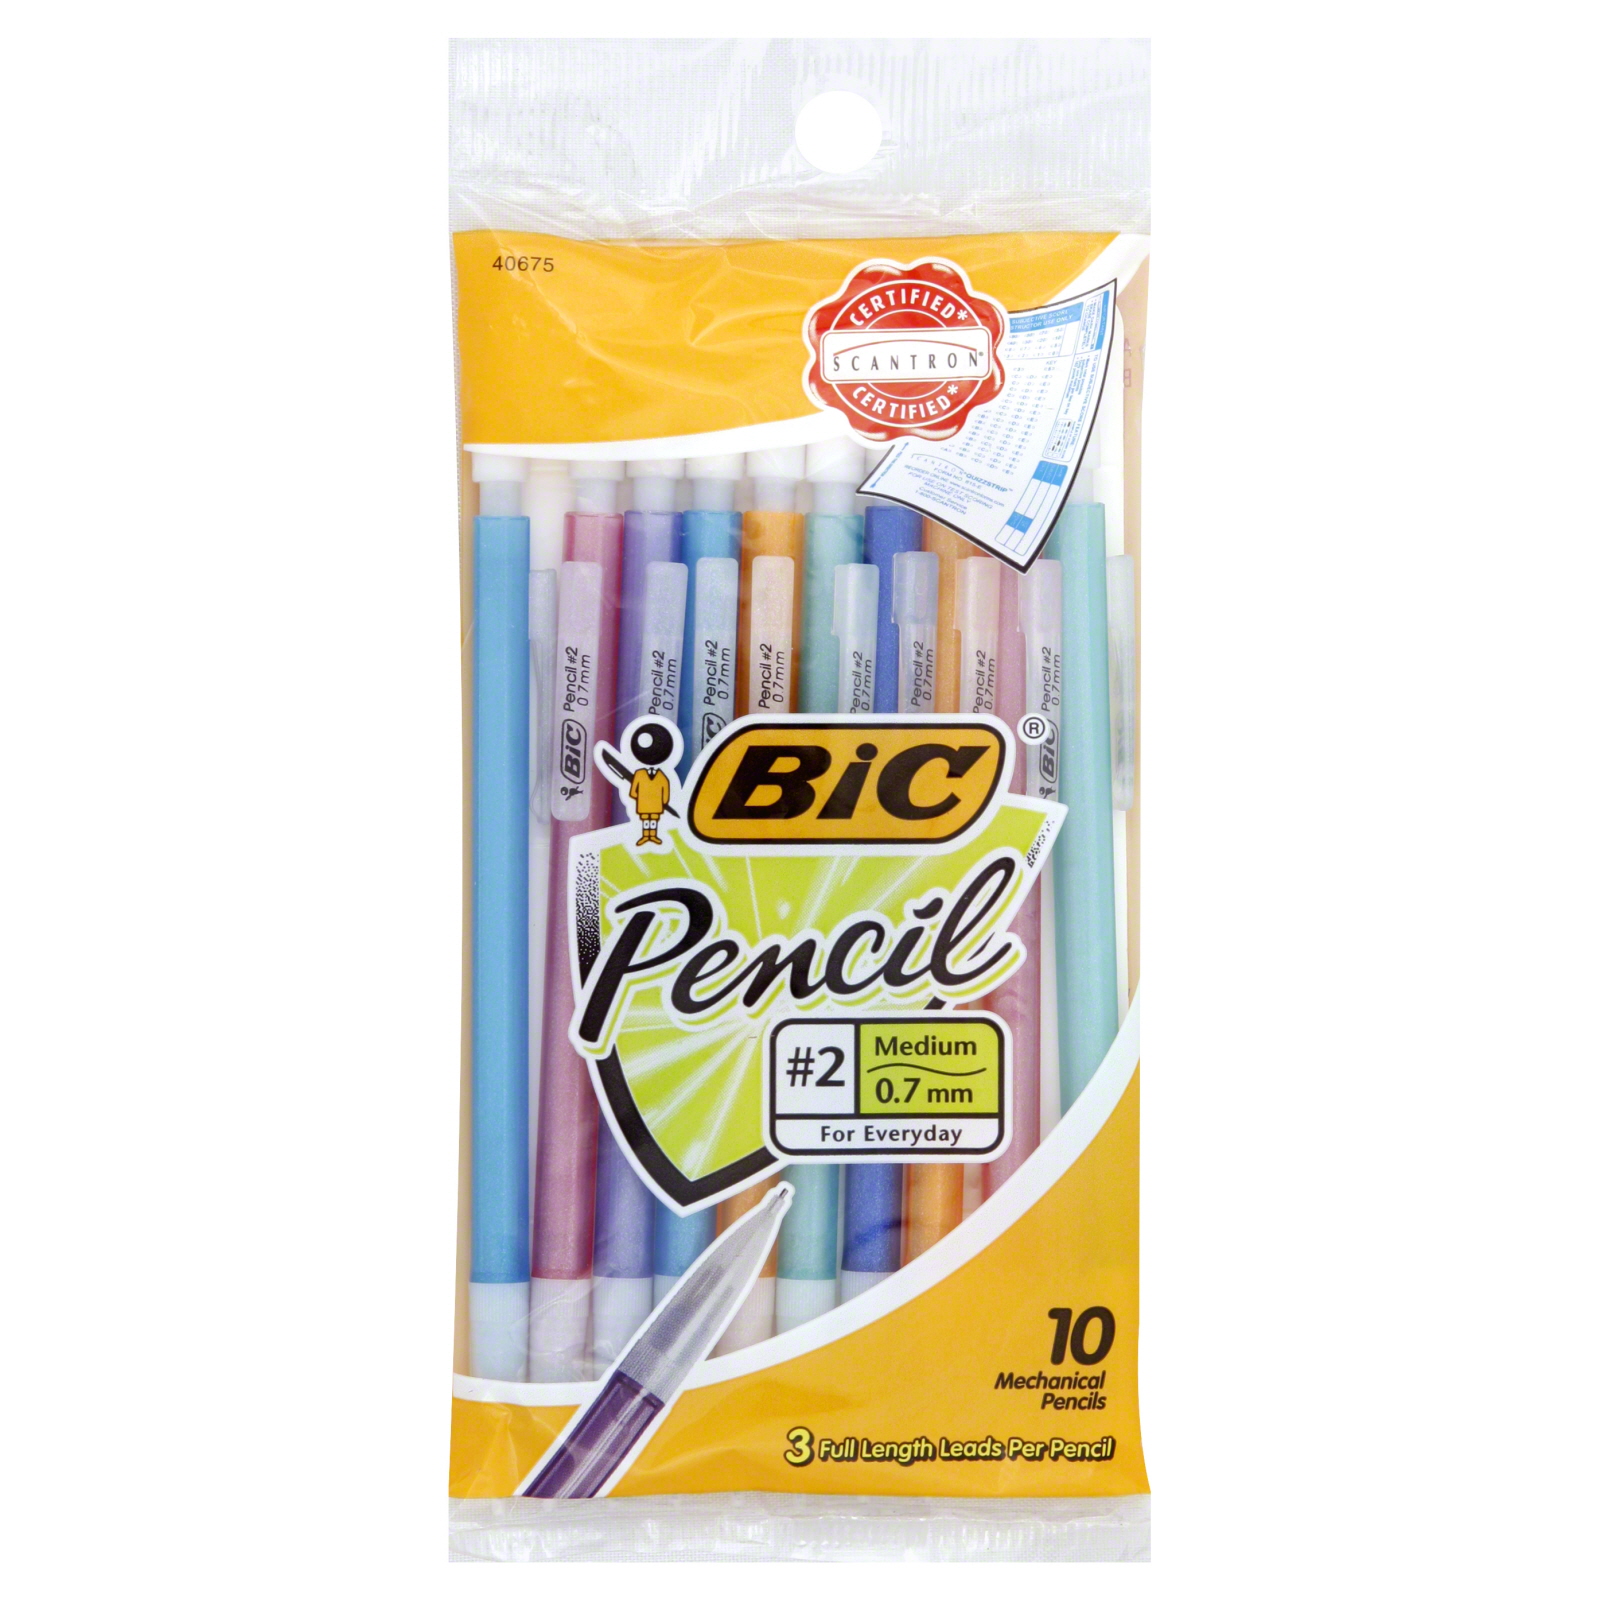 Bic Mechanical Pencils, Xtra Smooth, No. 2 (0.7 mm) - 10 mechanical pencils